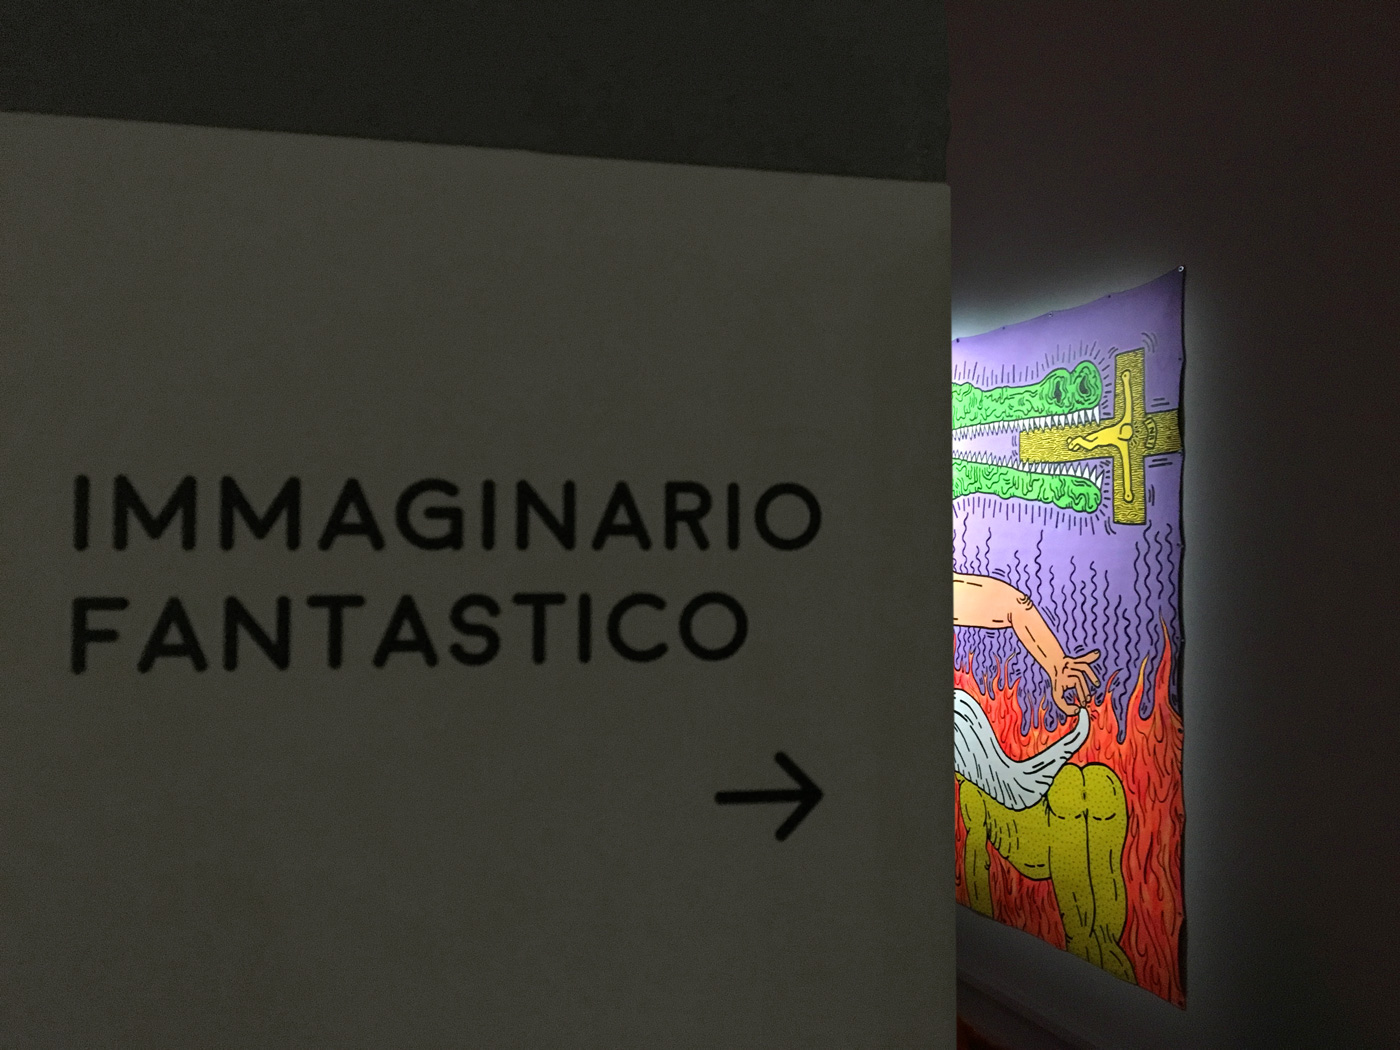 mostra ketih haring exhibit Palazzo Reale milano art exposition museum graphic graphic design 